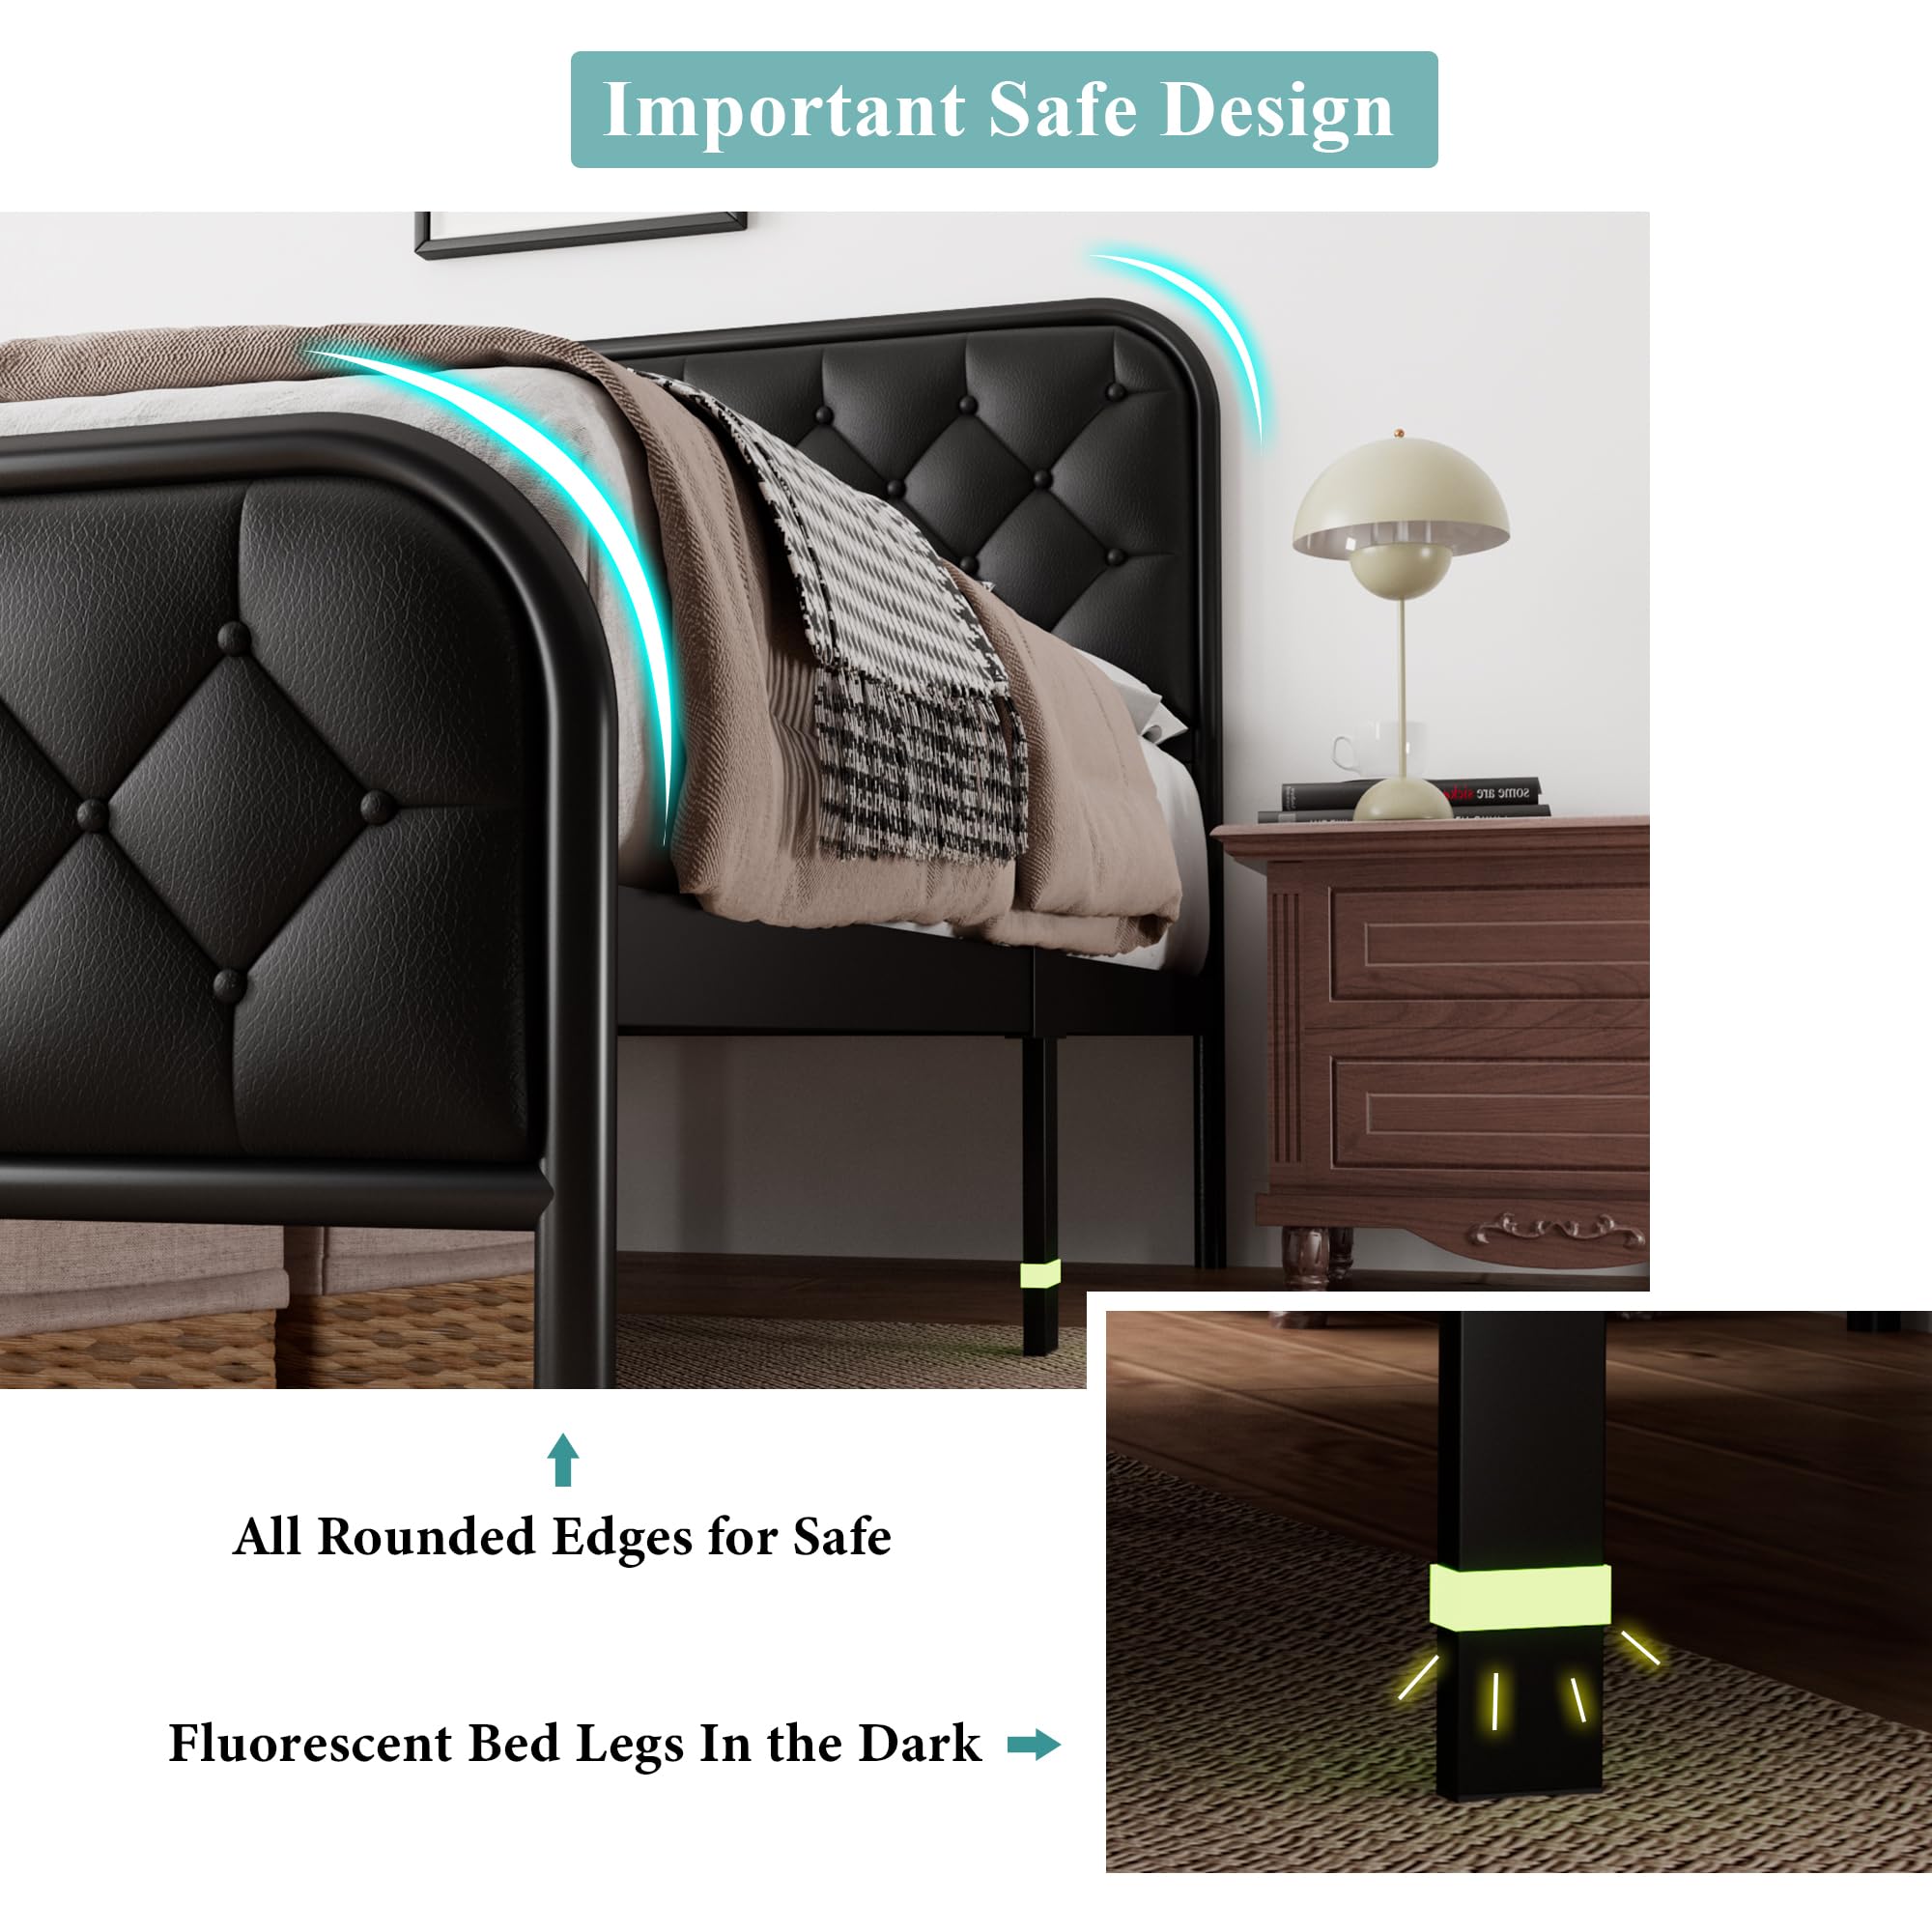 iPormis Upholstered King Platform Bed Frame, Heavy Duty Mattress Foundation, 12